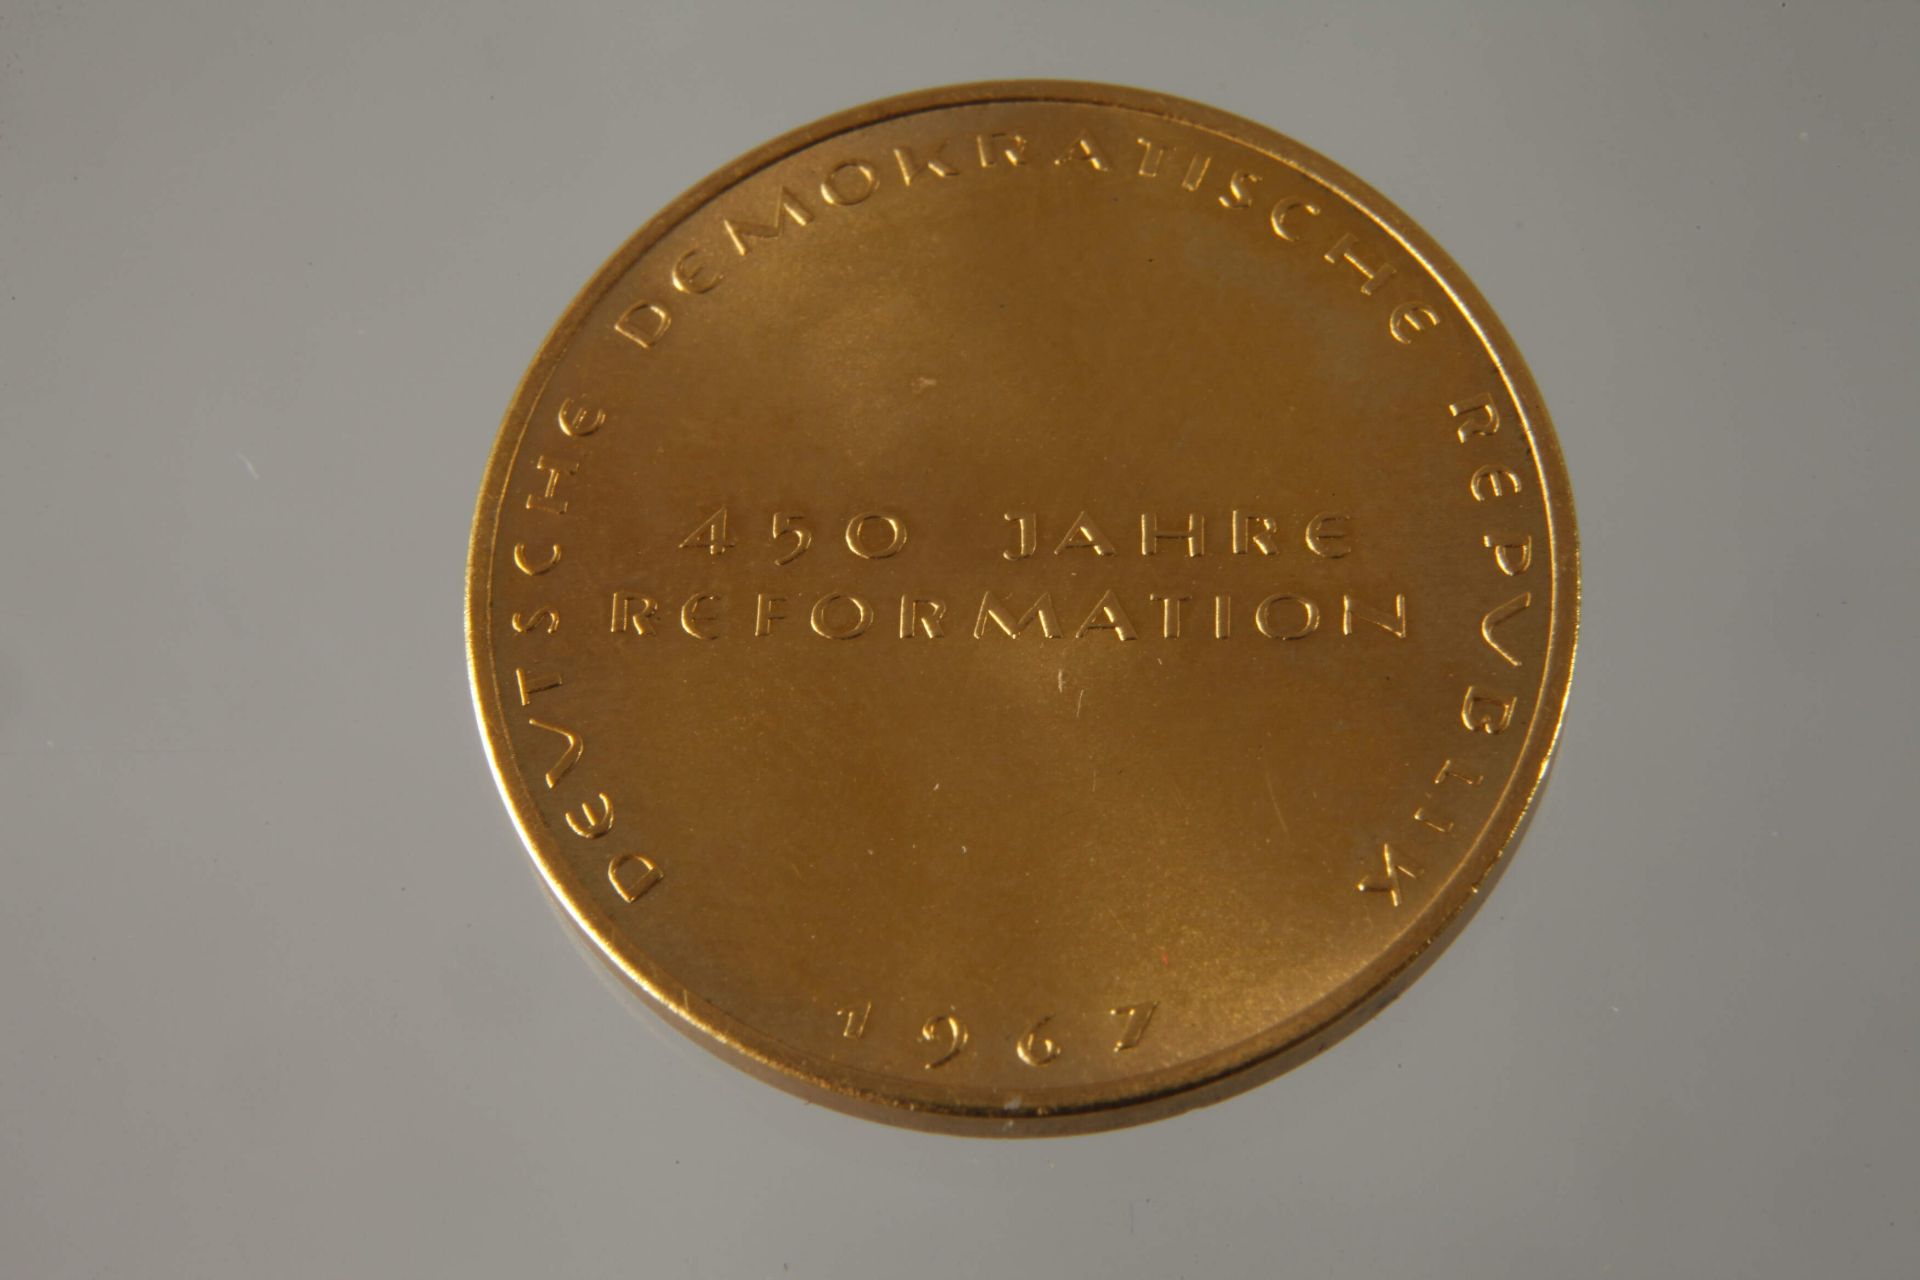 Goldmedaille Reformation DDR - Image 3 of 3